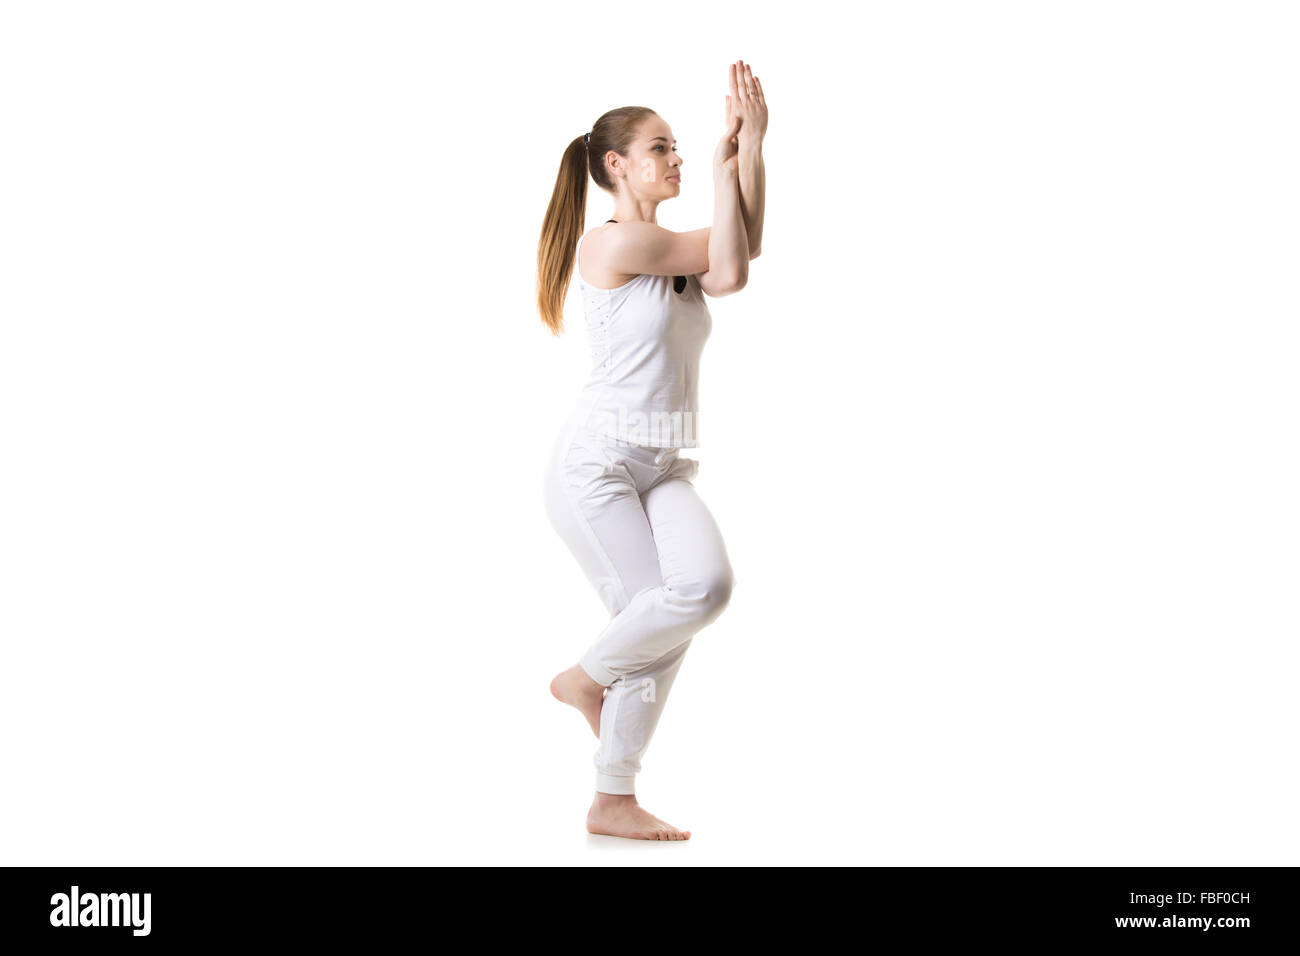 Alphabetical Yoga Poses Index